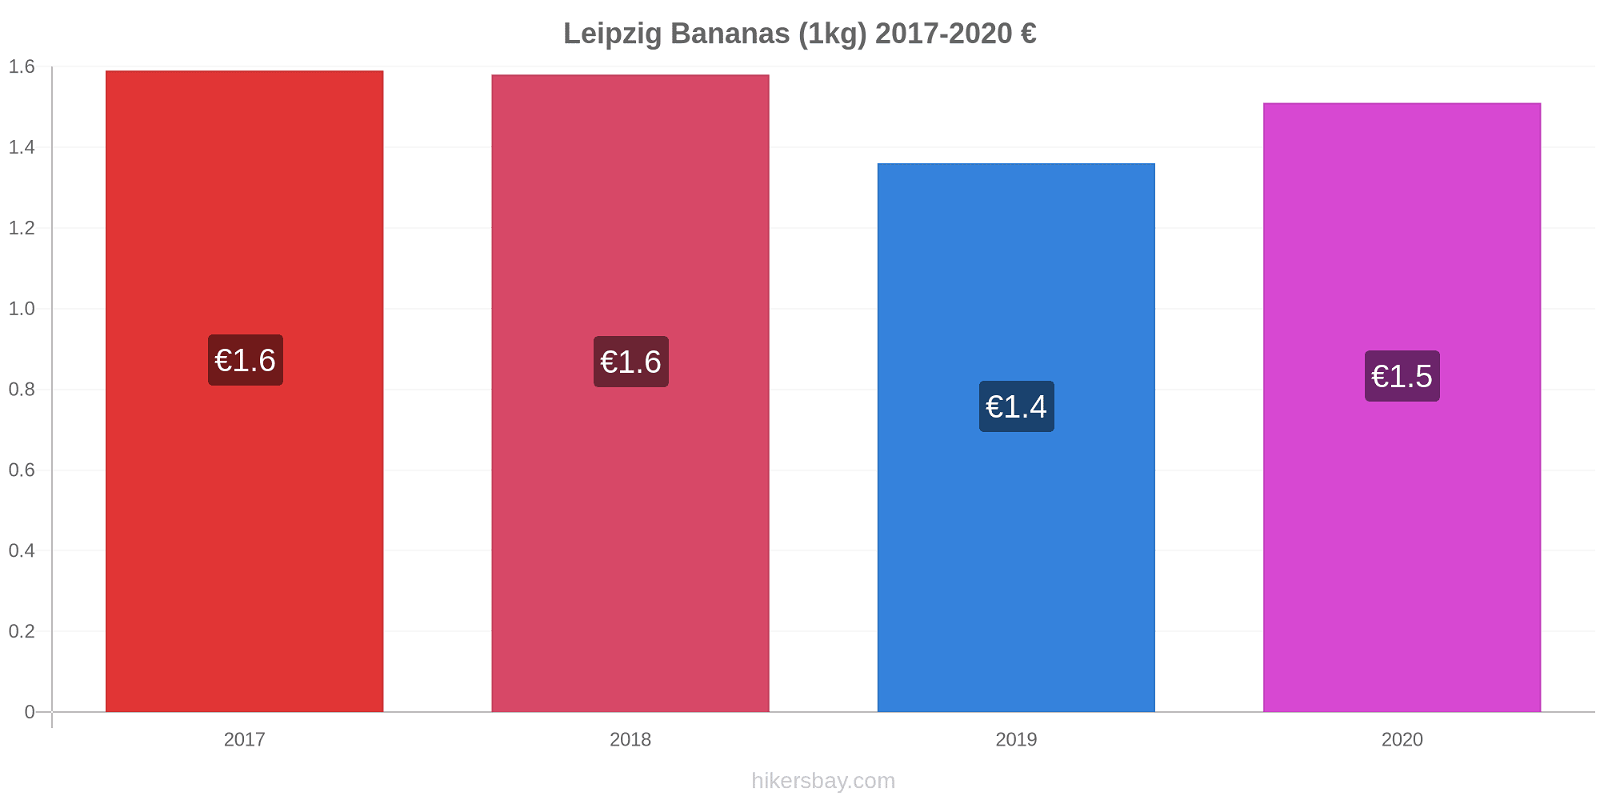 Leipzig price changes Bananas (1kg) hikersbay.com